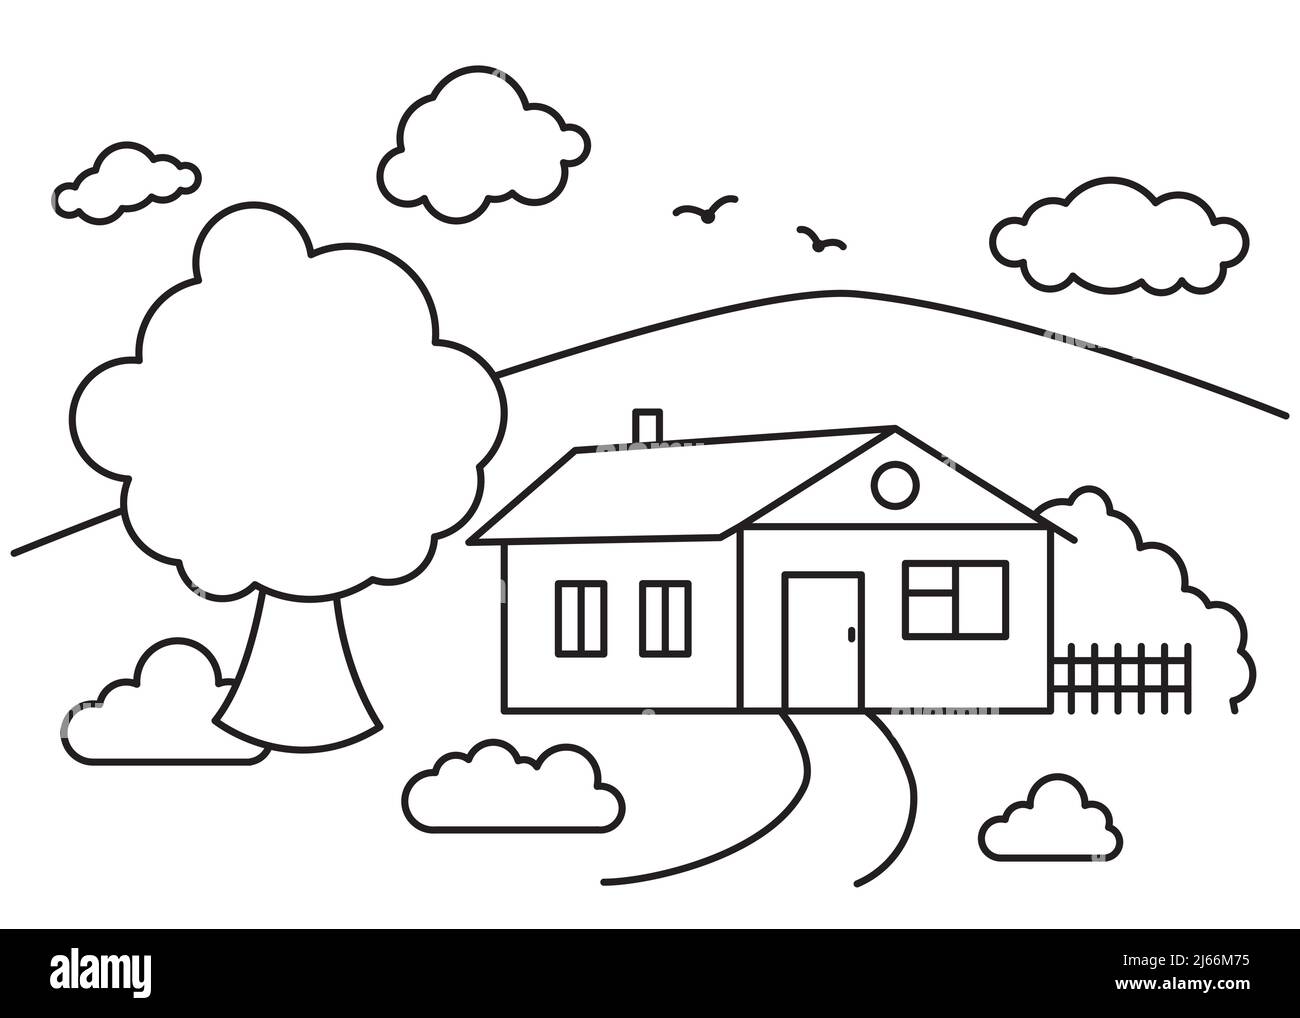 Line art landscape, village house, trees, plants, clouds and birds. Stroke, outline drawn illustration. Farm, agricultural landscape. Summer time Stock Vector